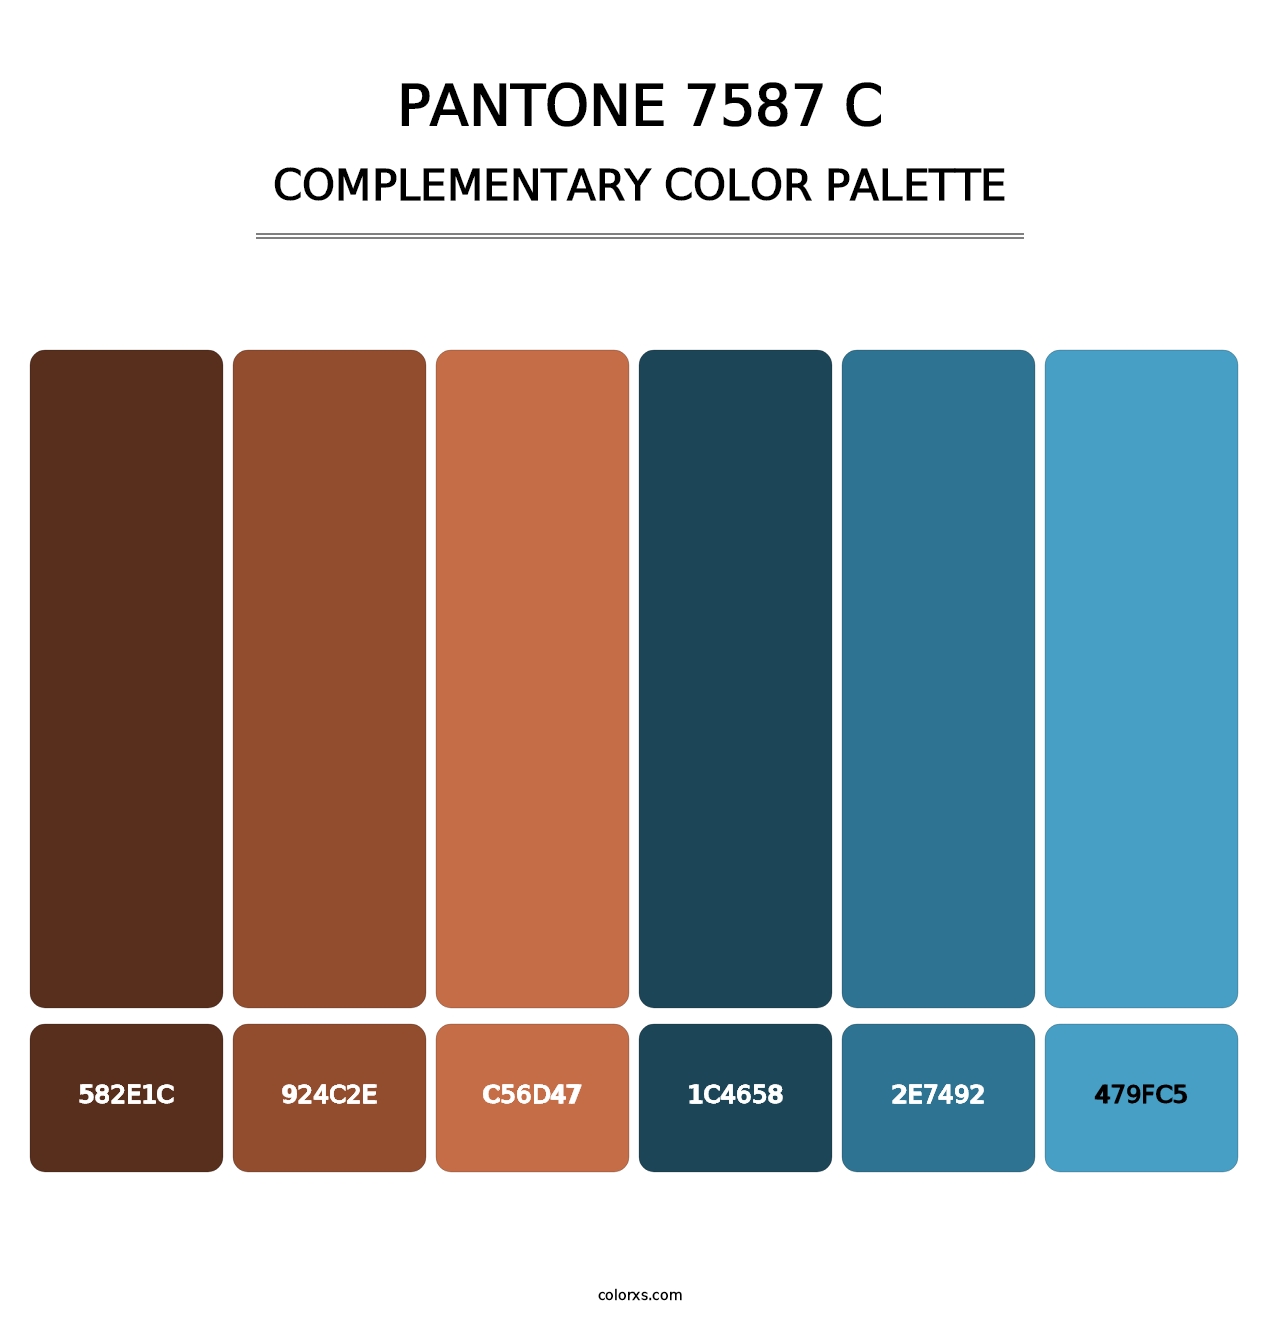 PANTONE 7587 C - Complementary Color Palette